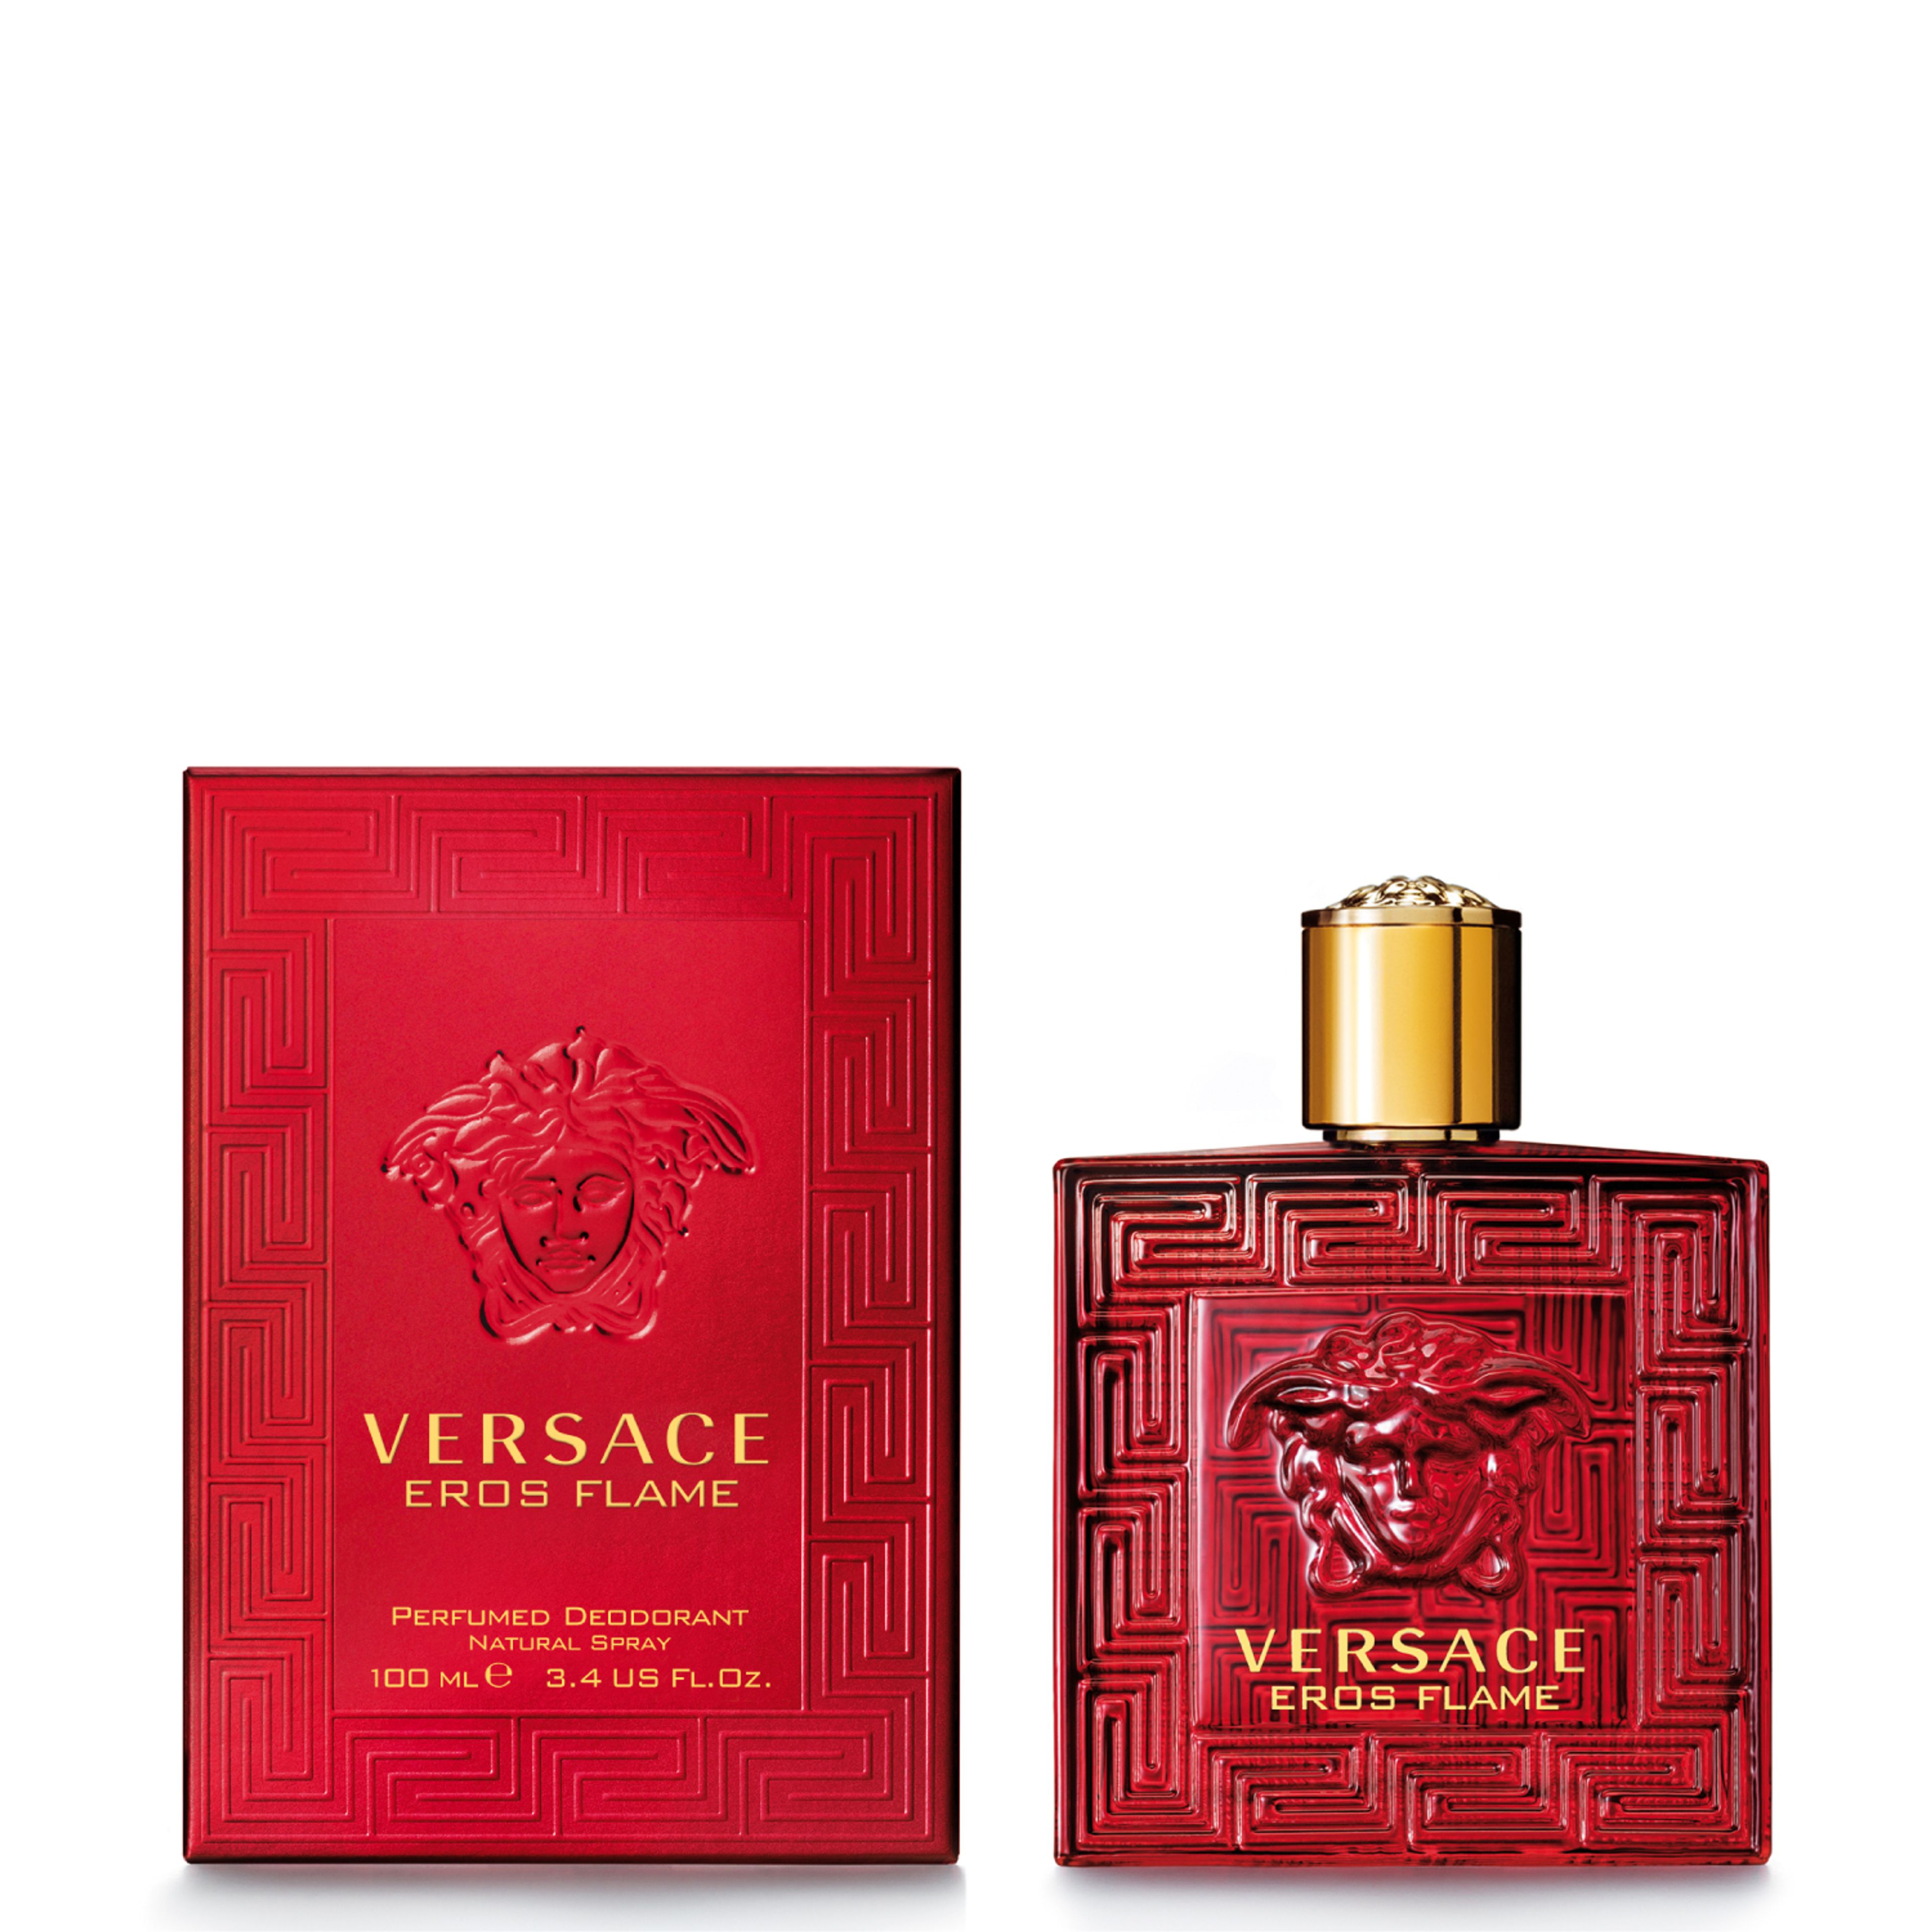 Versace Eros Flame Perfumed Deodorant 1